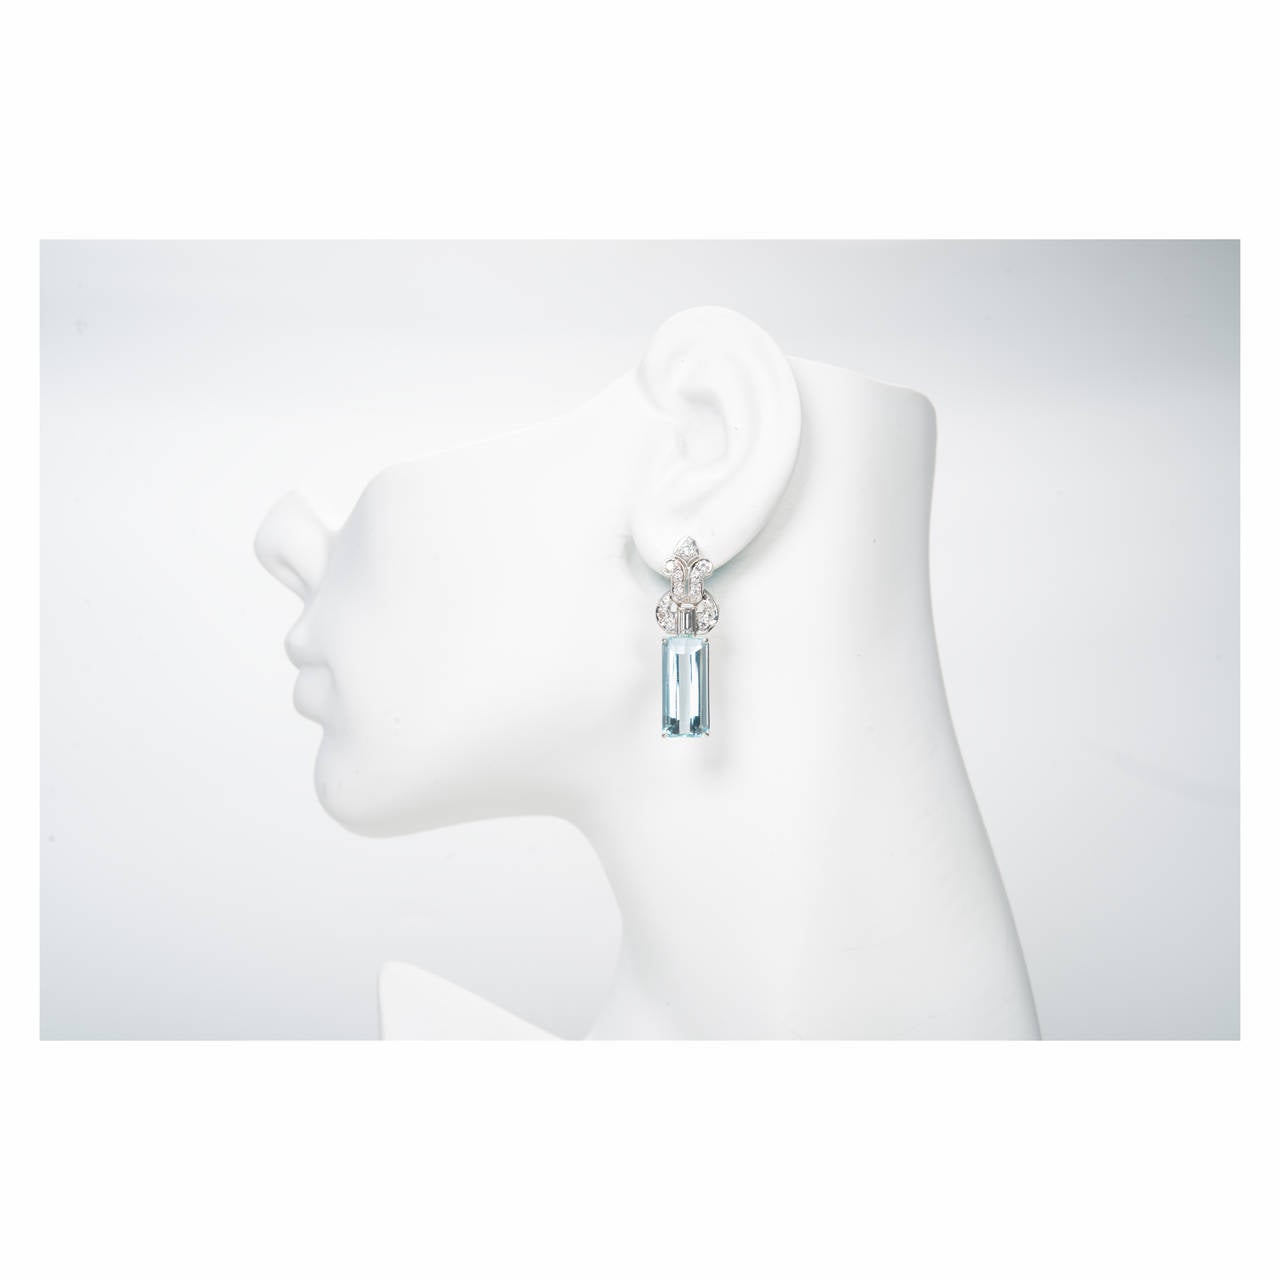 aquamarine dangle earrings